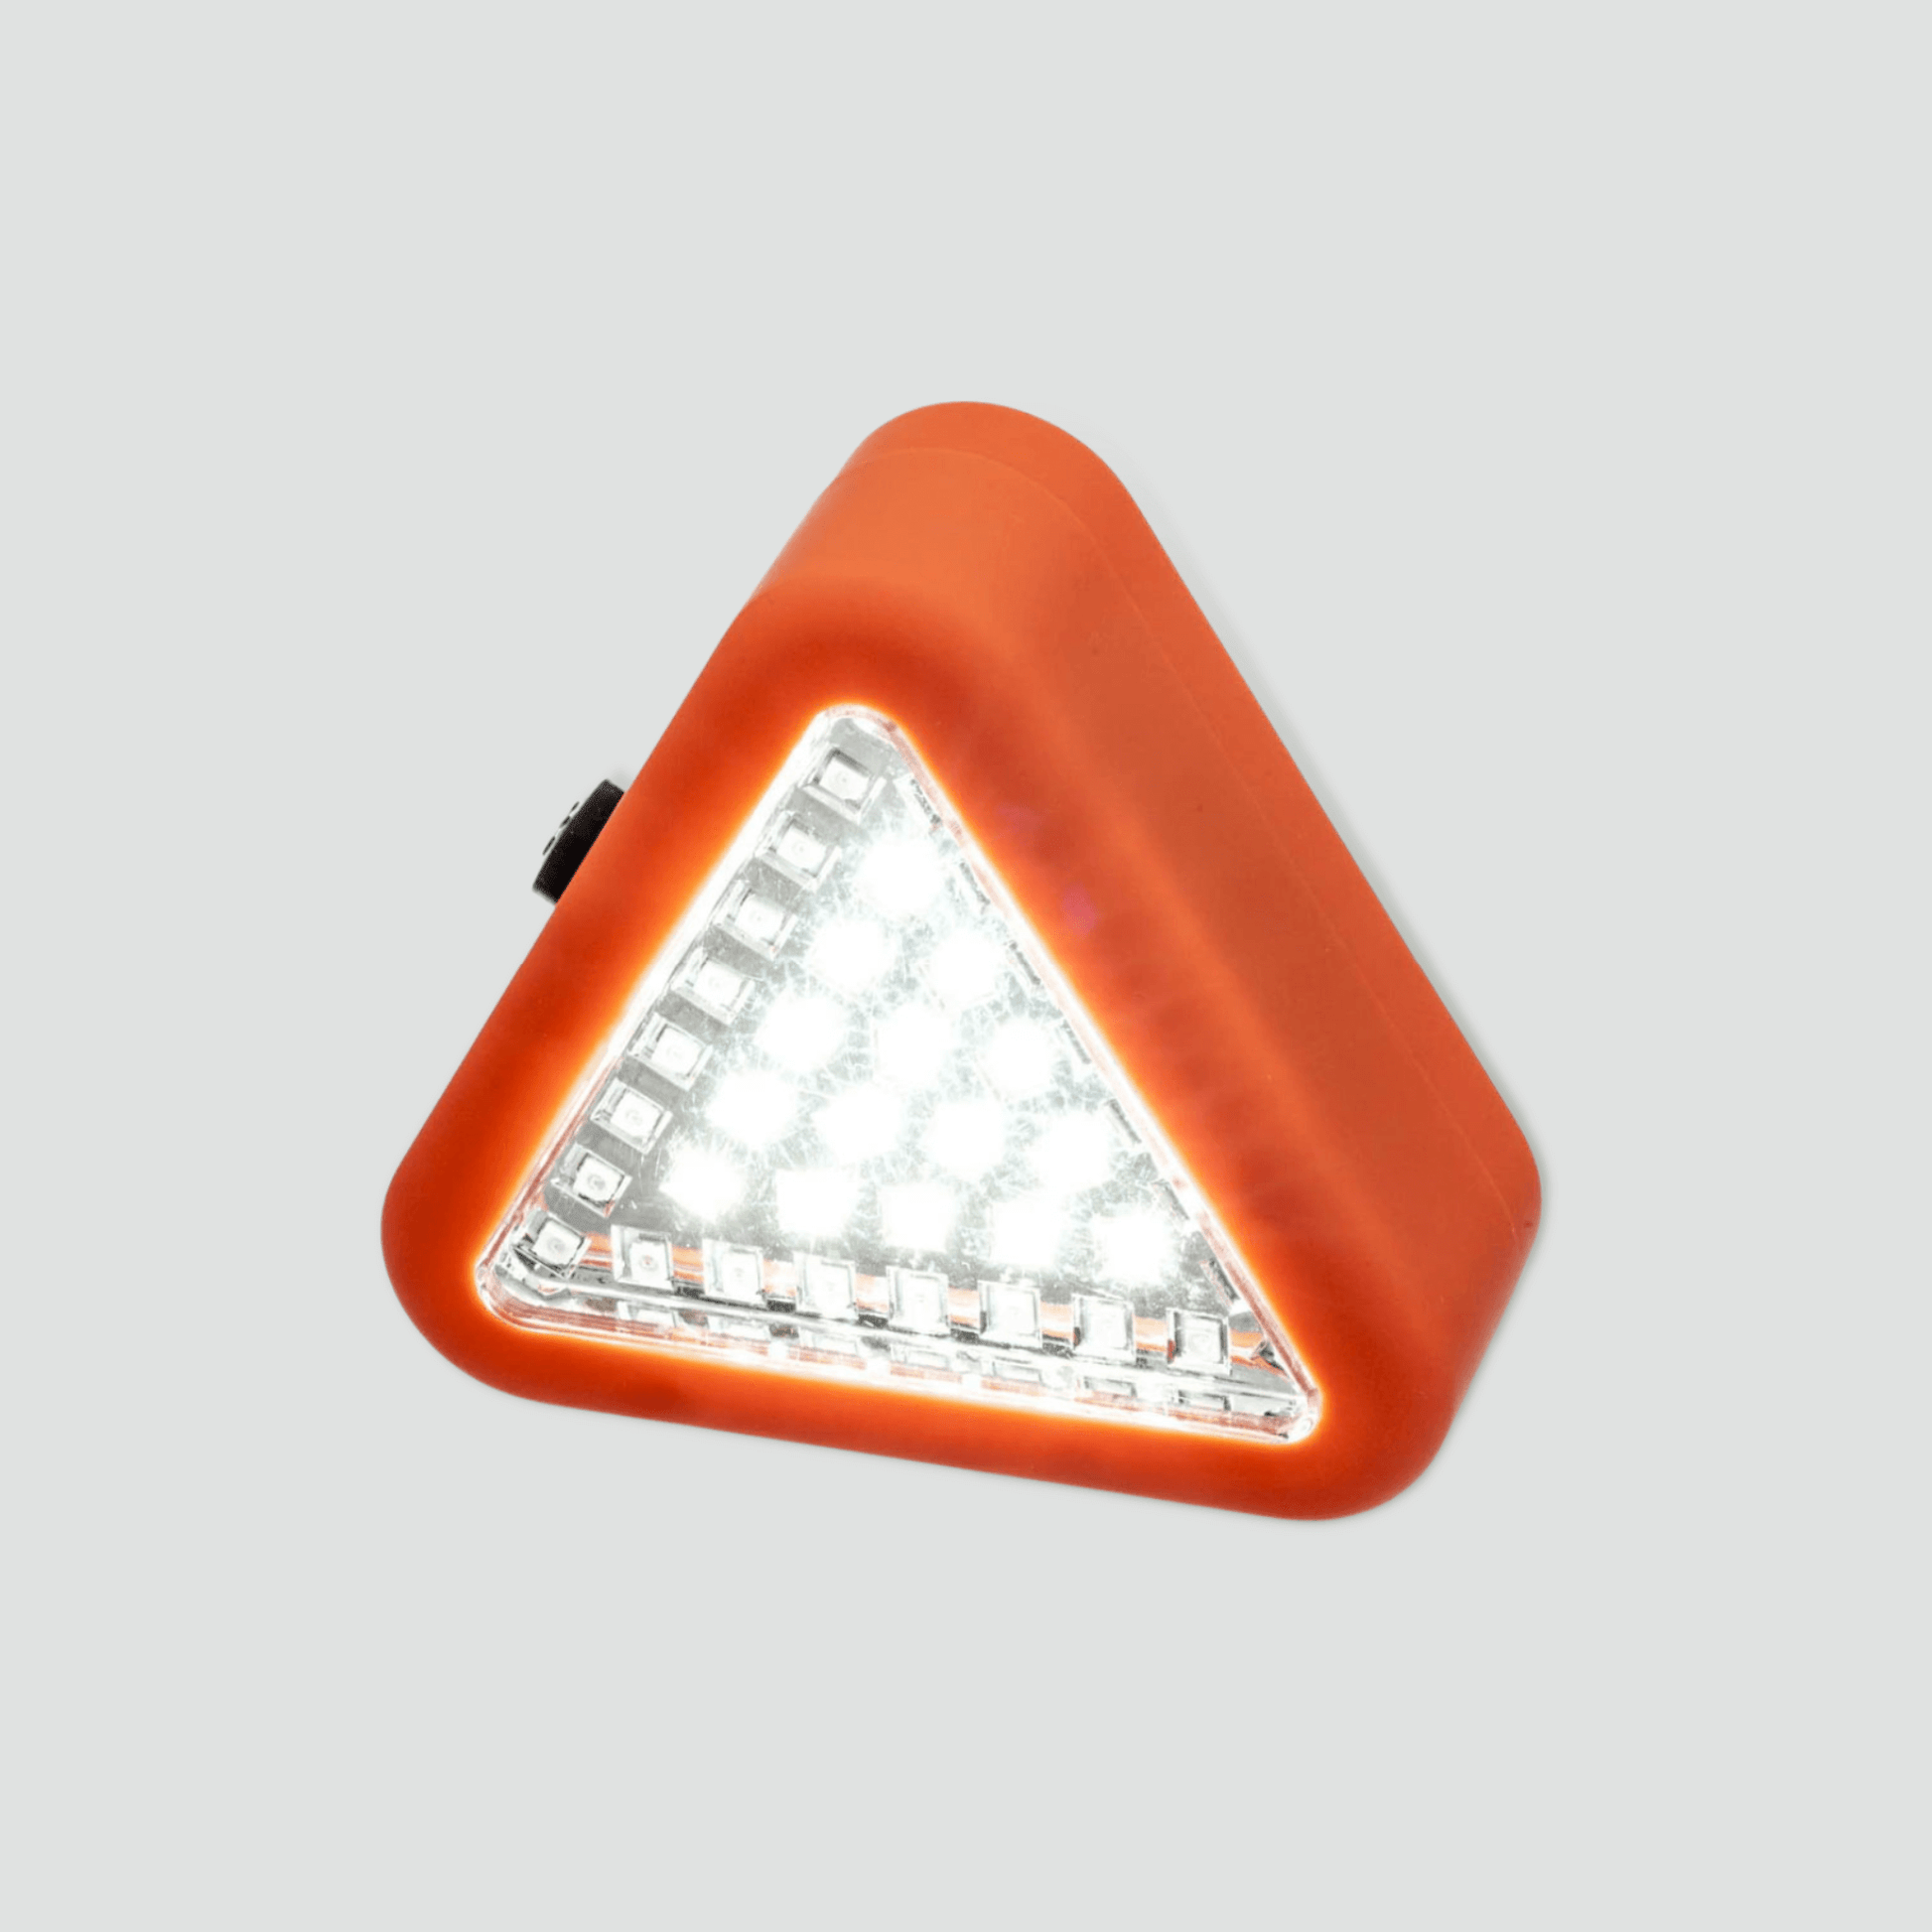 Orange safety triangle light with white light on